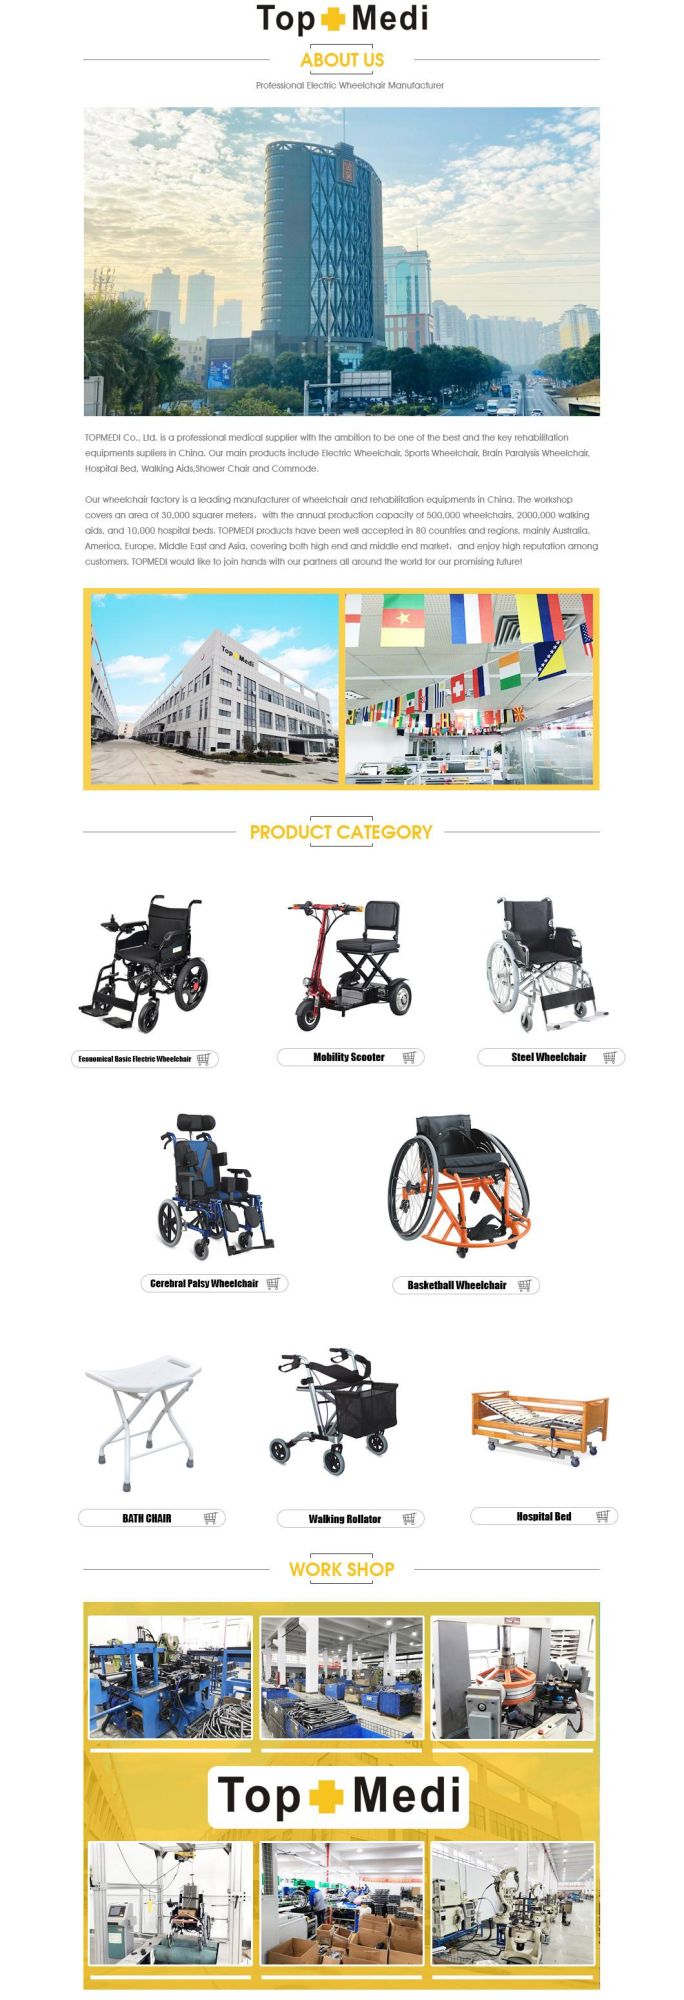 Topmedi Pediatric Wheelchair Children Multi-Purpose Wheelchair